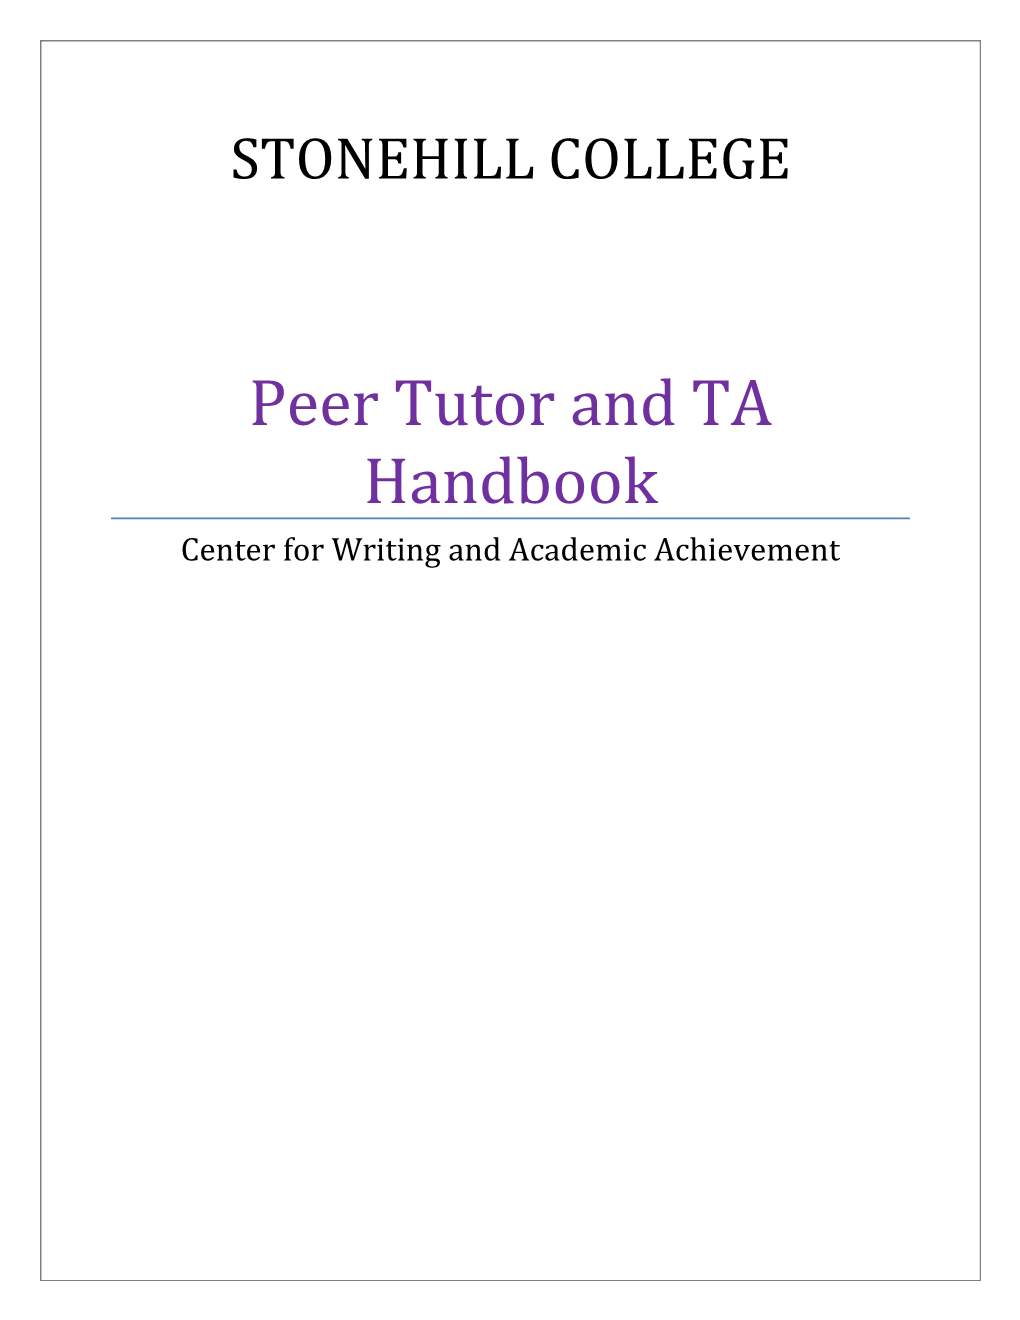 Peer Tutor and TA Handbook